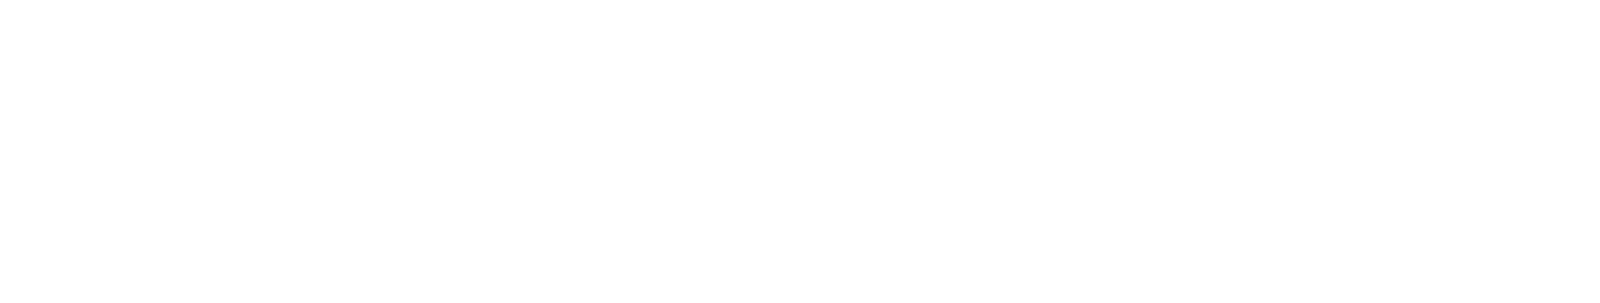 Westpac Banking logo large for dark backgrounds (transparent PNG)